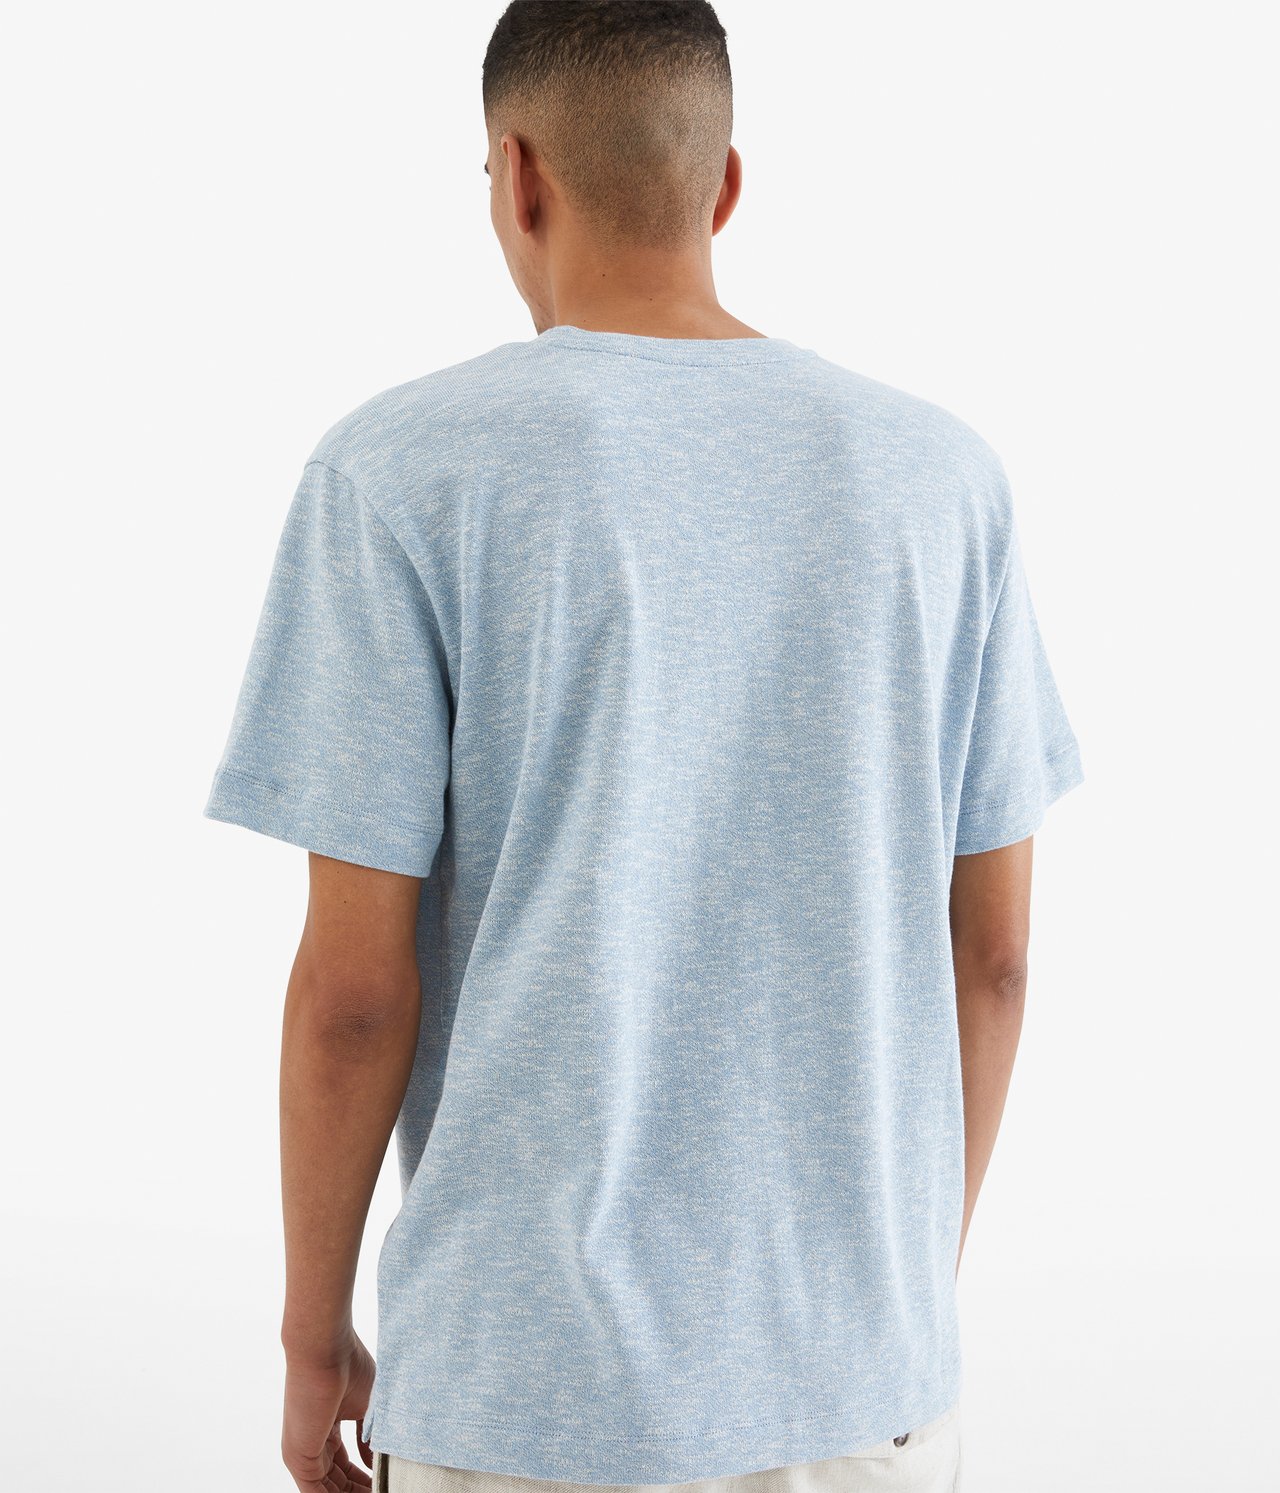 T-shirt loose fit - Ljusblå - 189cm / Storlek: M - 3